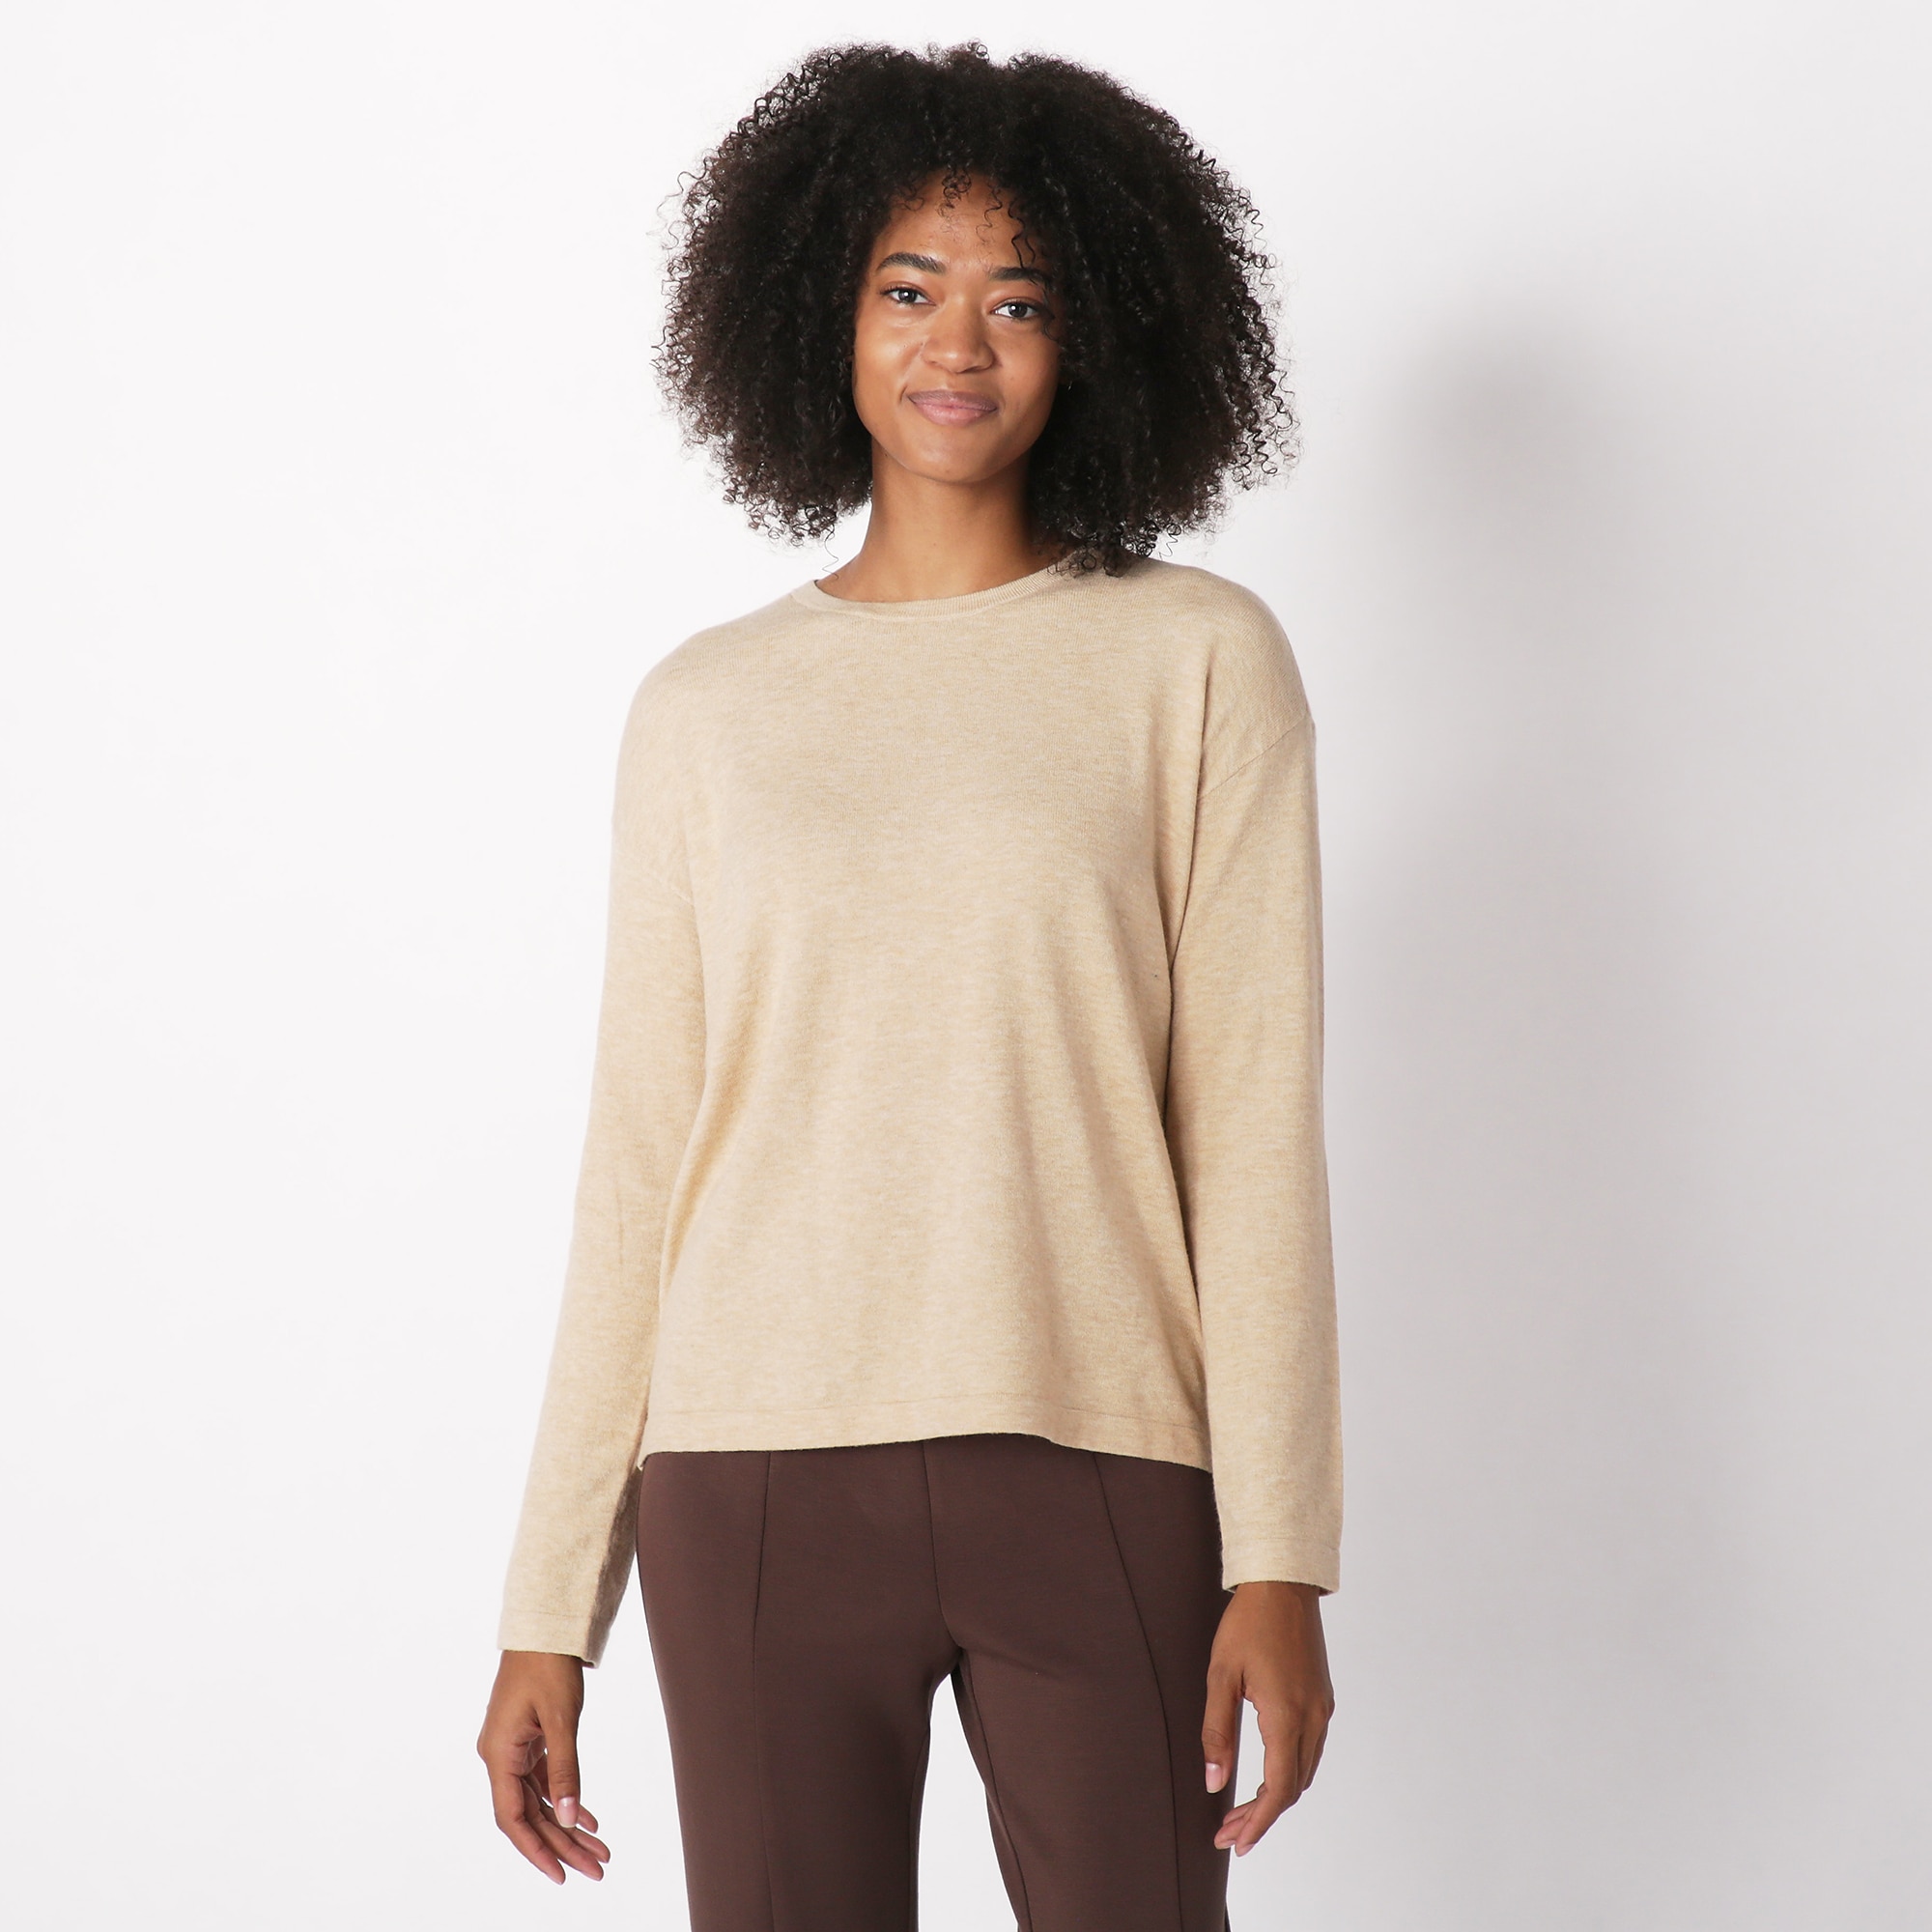 Wynne Layers Cashmere Blend Soft Knit Sweater